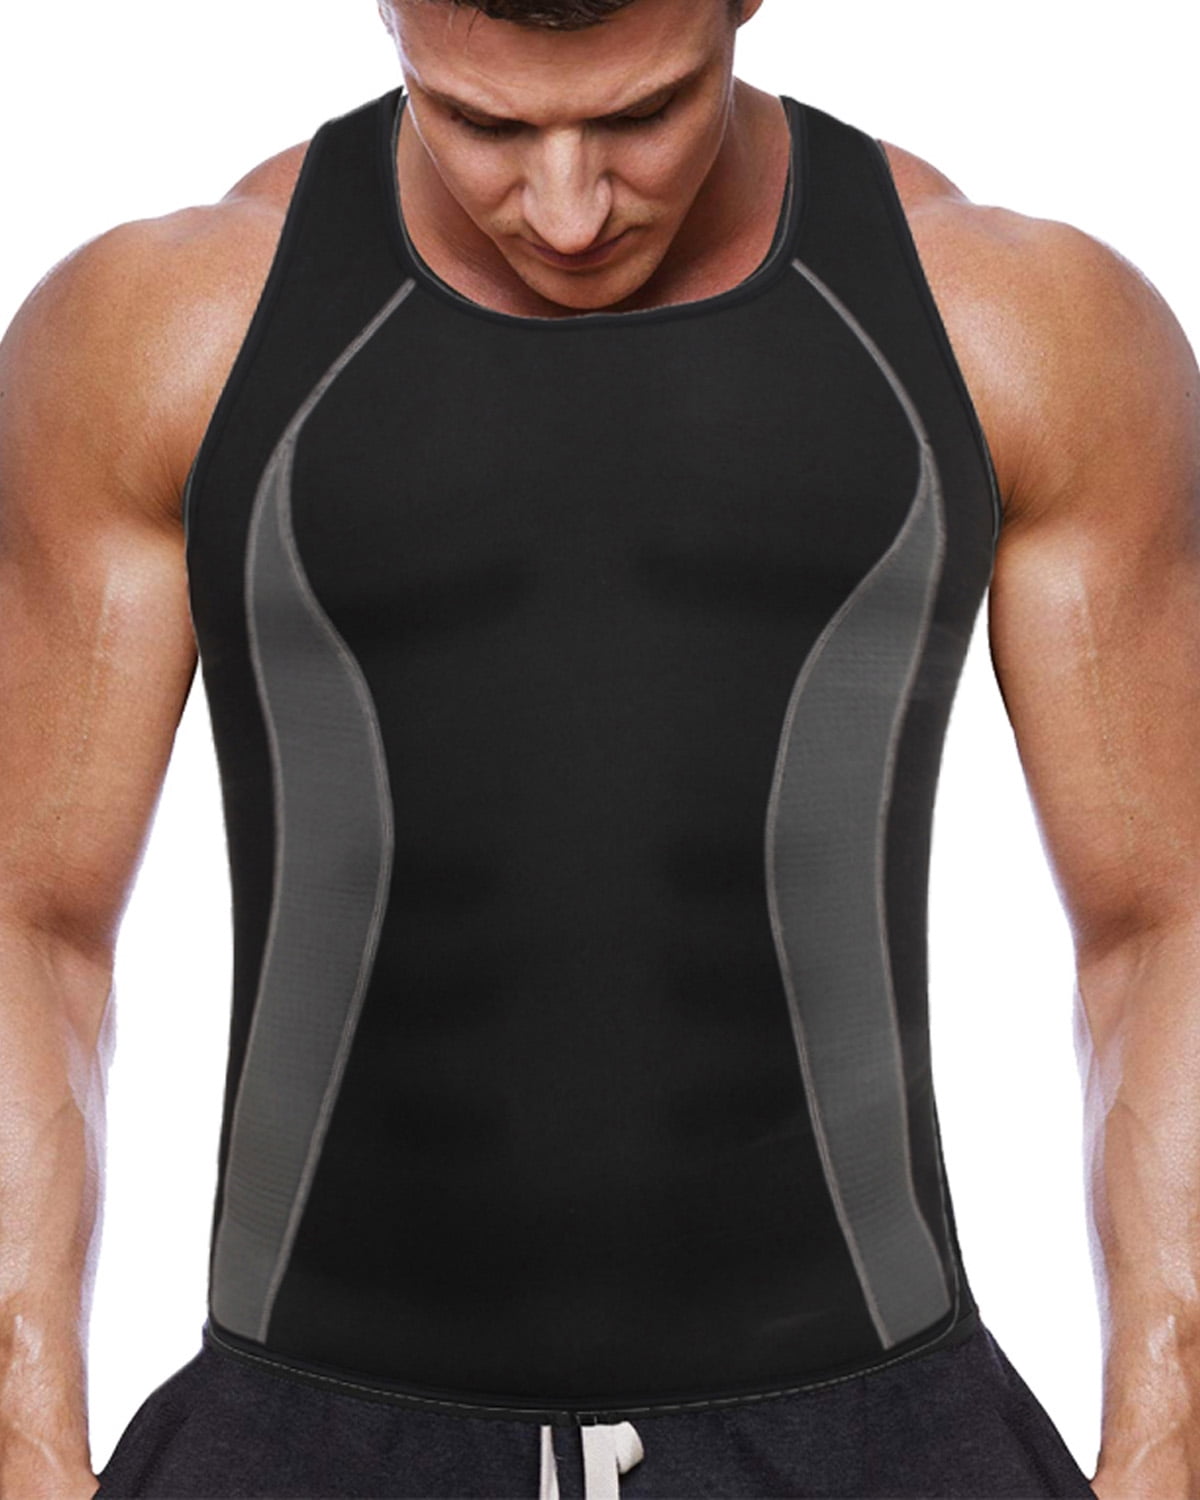 Men Polymer Sauna Sweat Vest Waist Trainer Body Shaper Weight Loss Tank Top Suit 